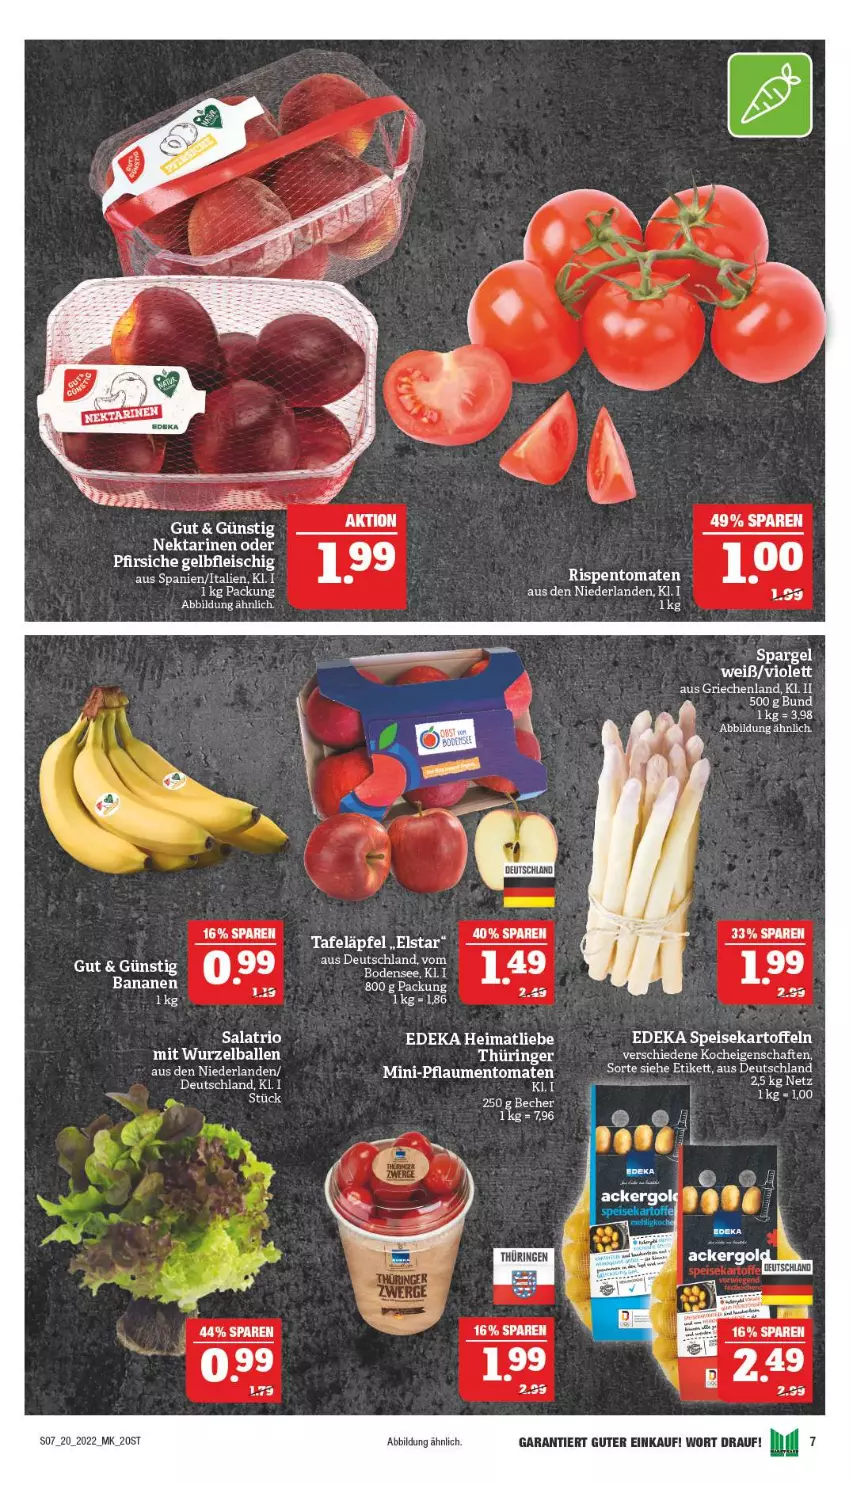 Aktueller Prospekt Marktkauf - Prospekt - von 15.05 bis 21.05.2022 - strona 7 - produkty: ball, banane, bananen, deka, eis, kartoffel, kartoffeln, Nektar, nektarinen, nektarinen oder, pflaume, pflaumen, ring, salat, speisekartoffeln, tafeläpfel, Ti, tomate, tomaten